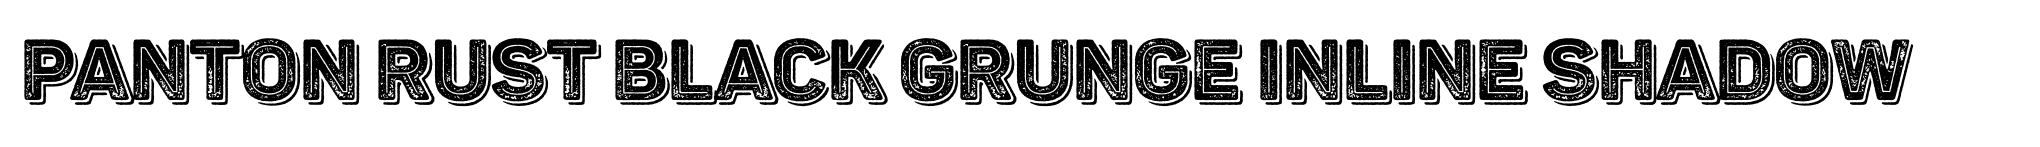 Panton Rust Black Grunge Inline Shadow image